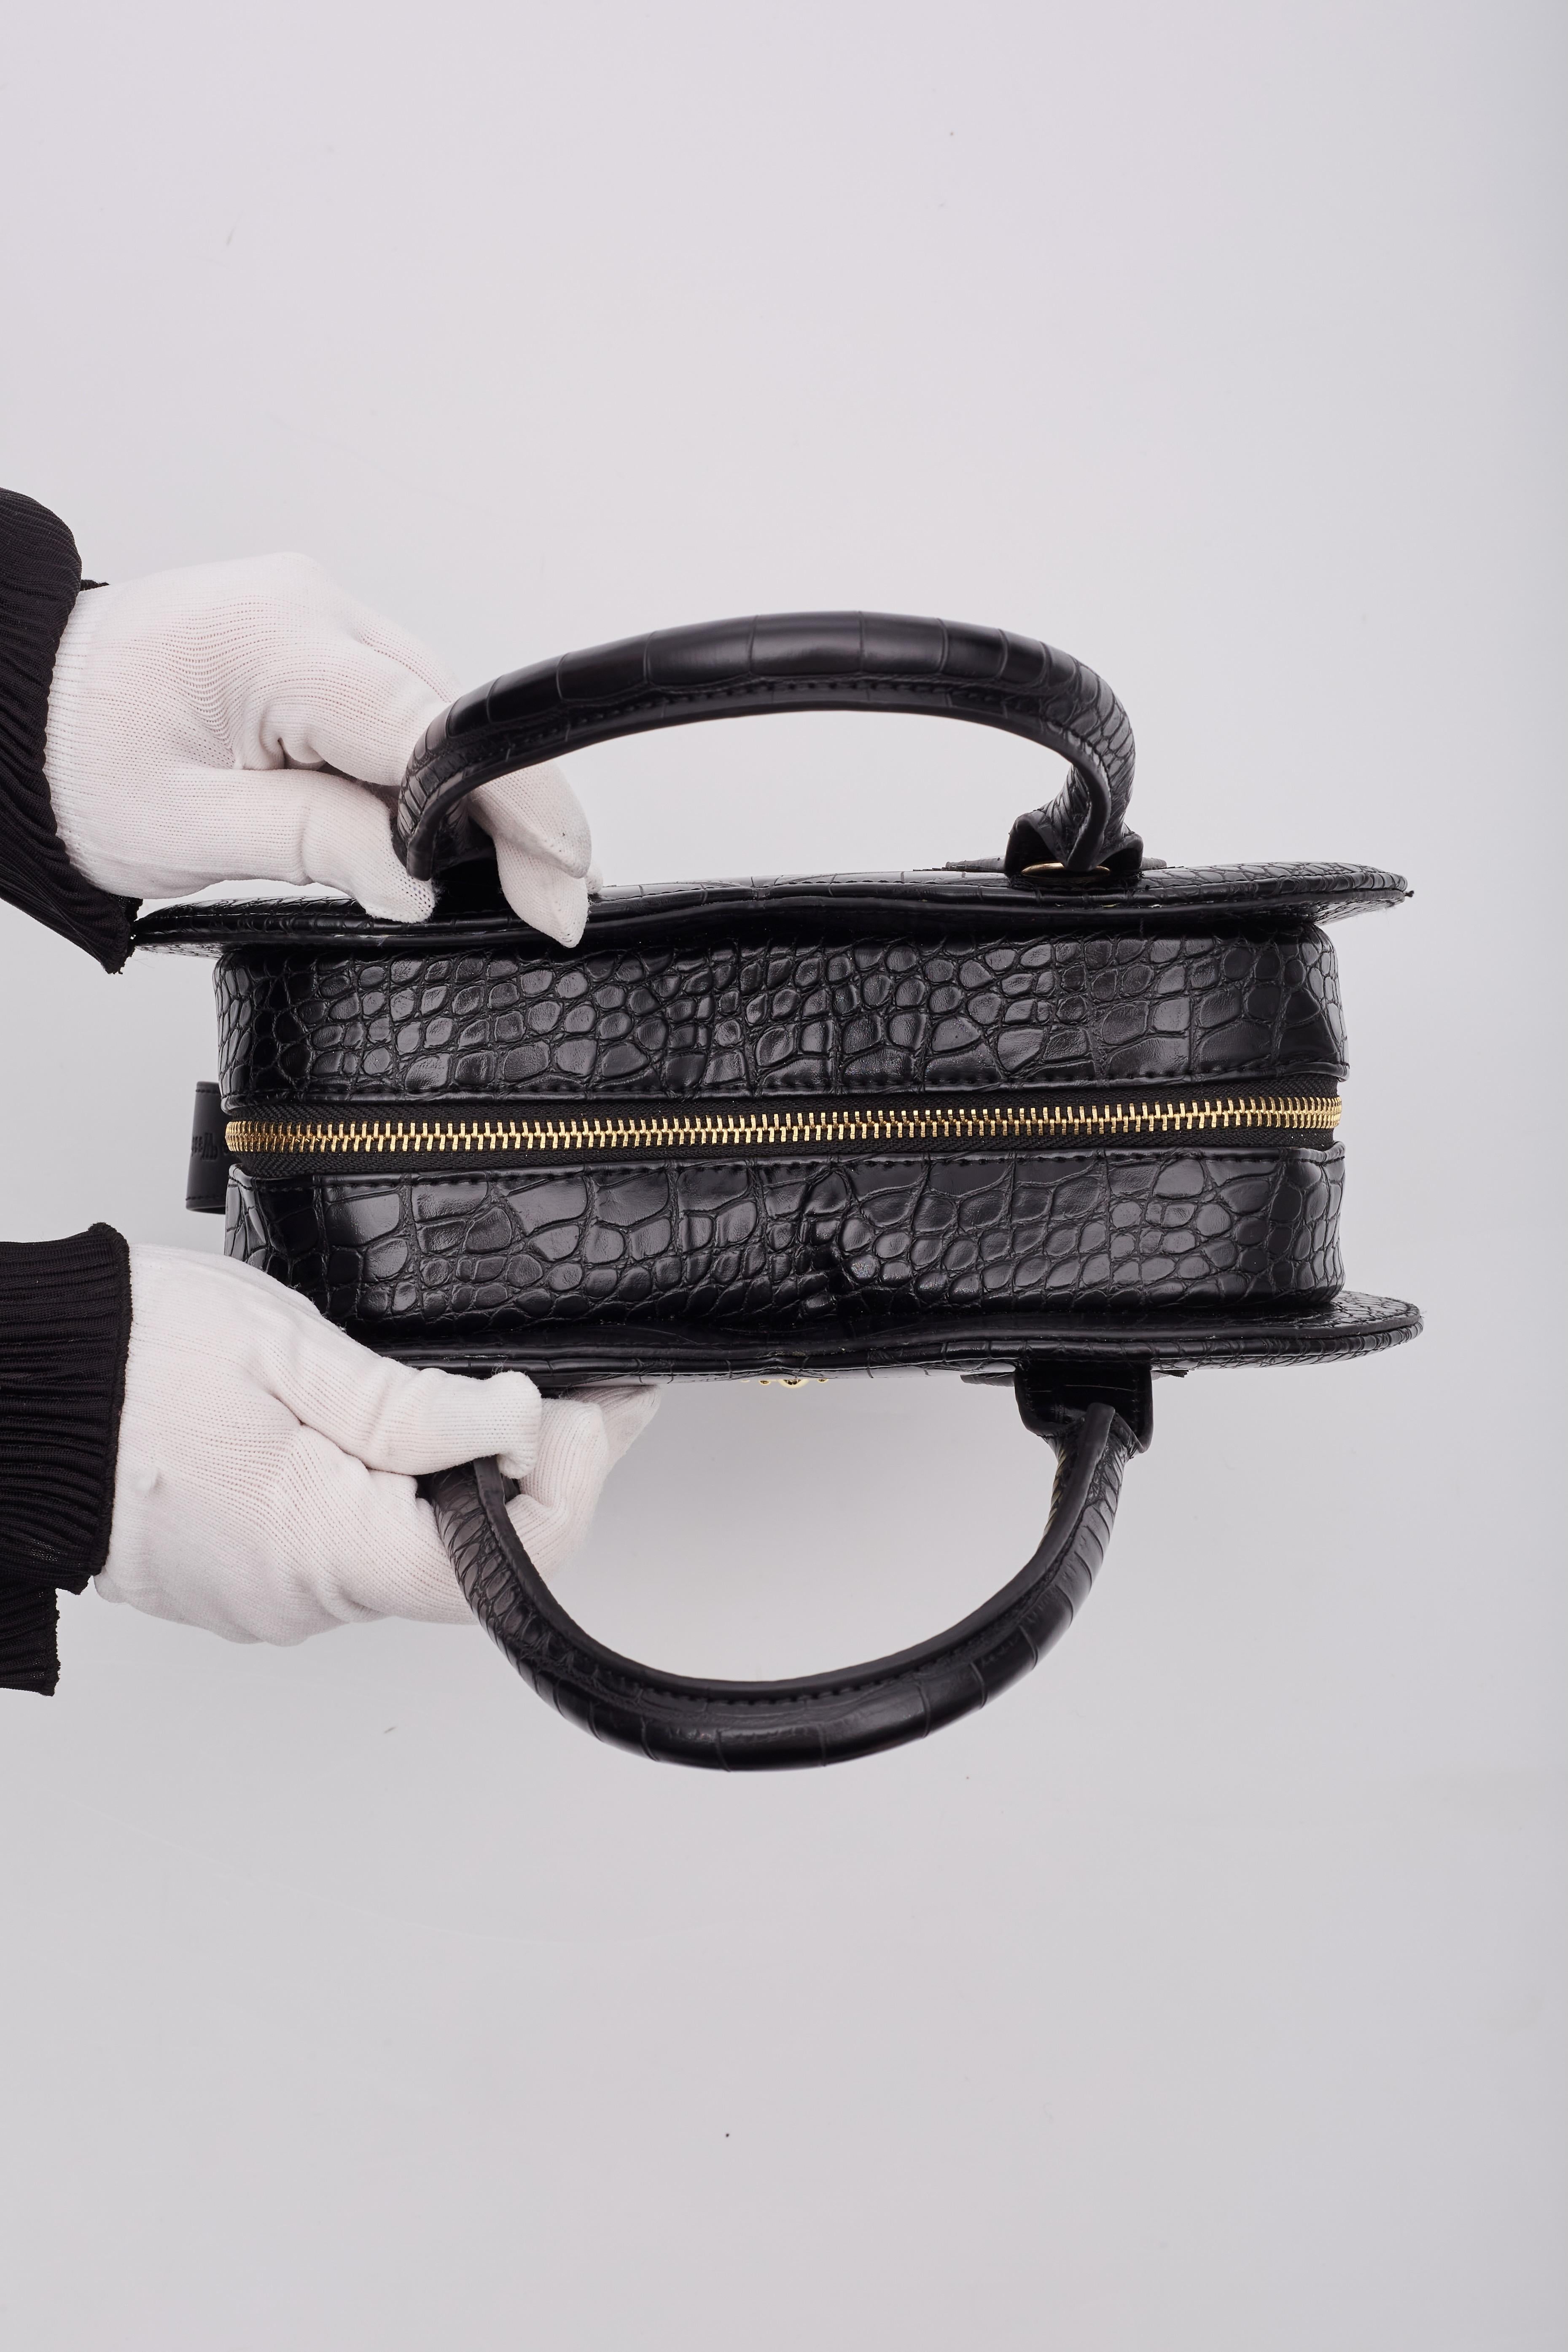 Vivienne Westwood Black Croc Embossed Chancery Heart Handbag For Sale 4